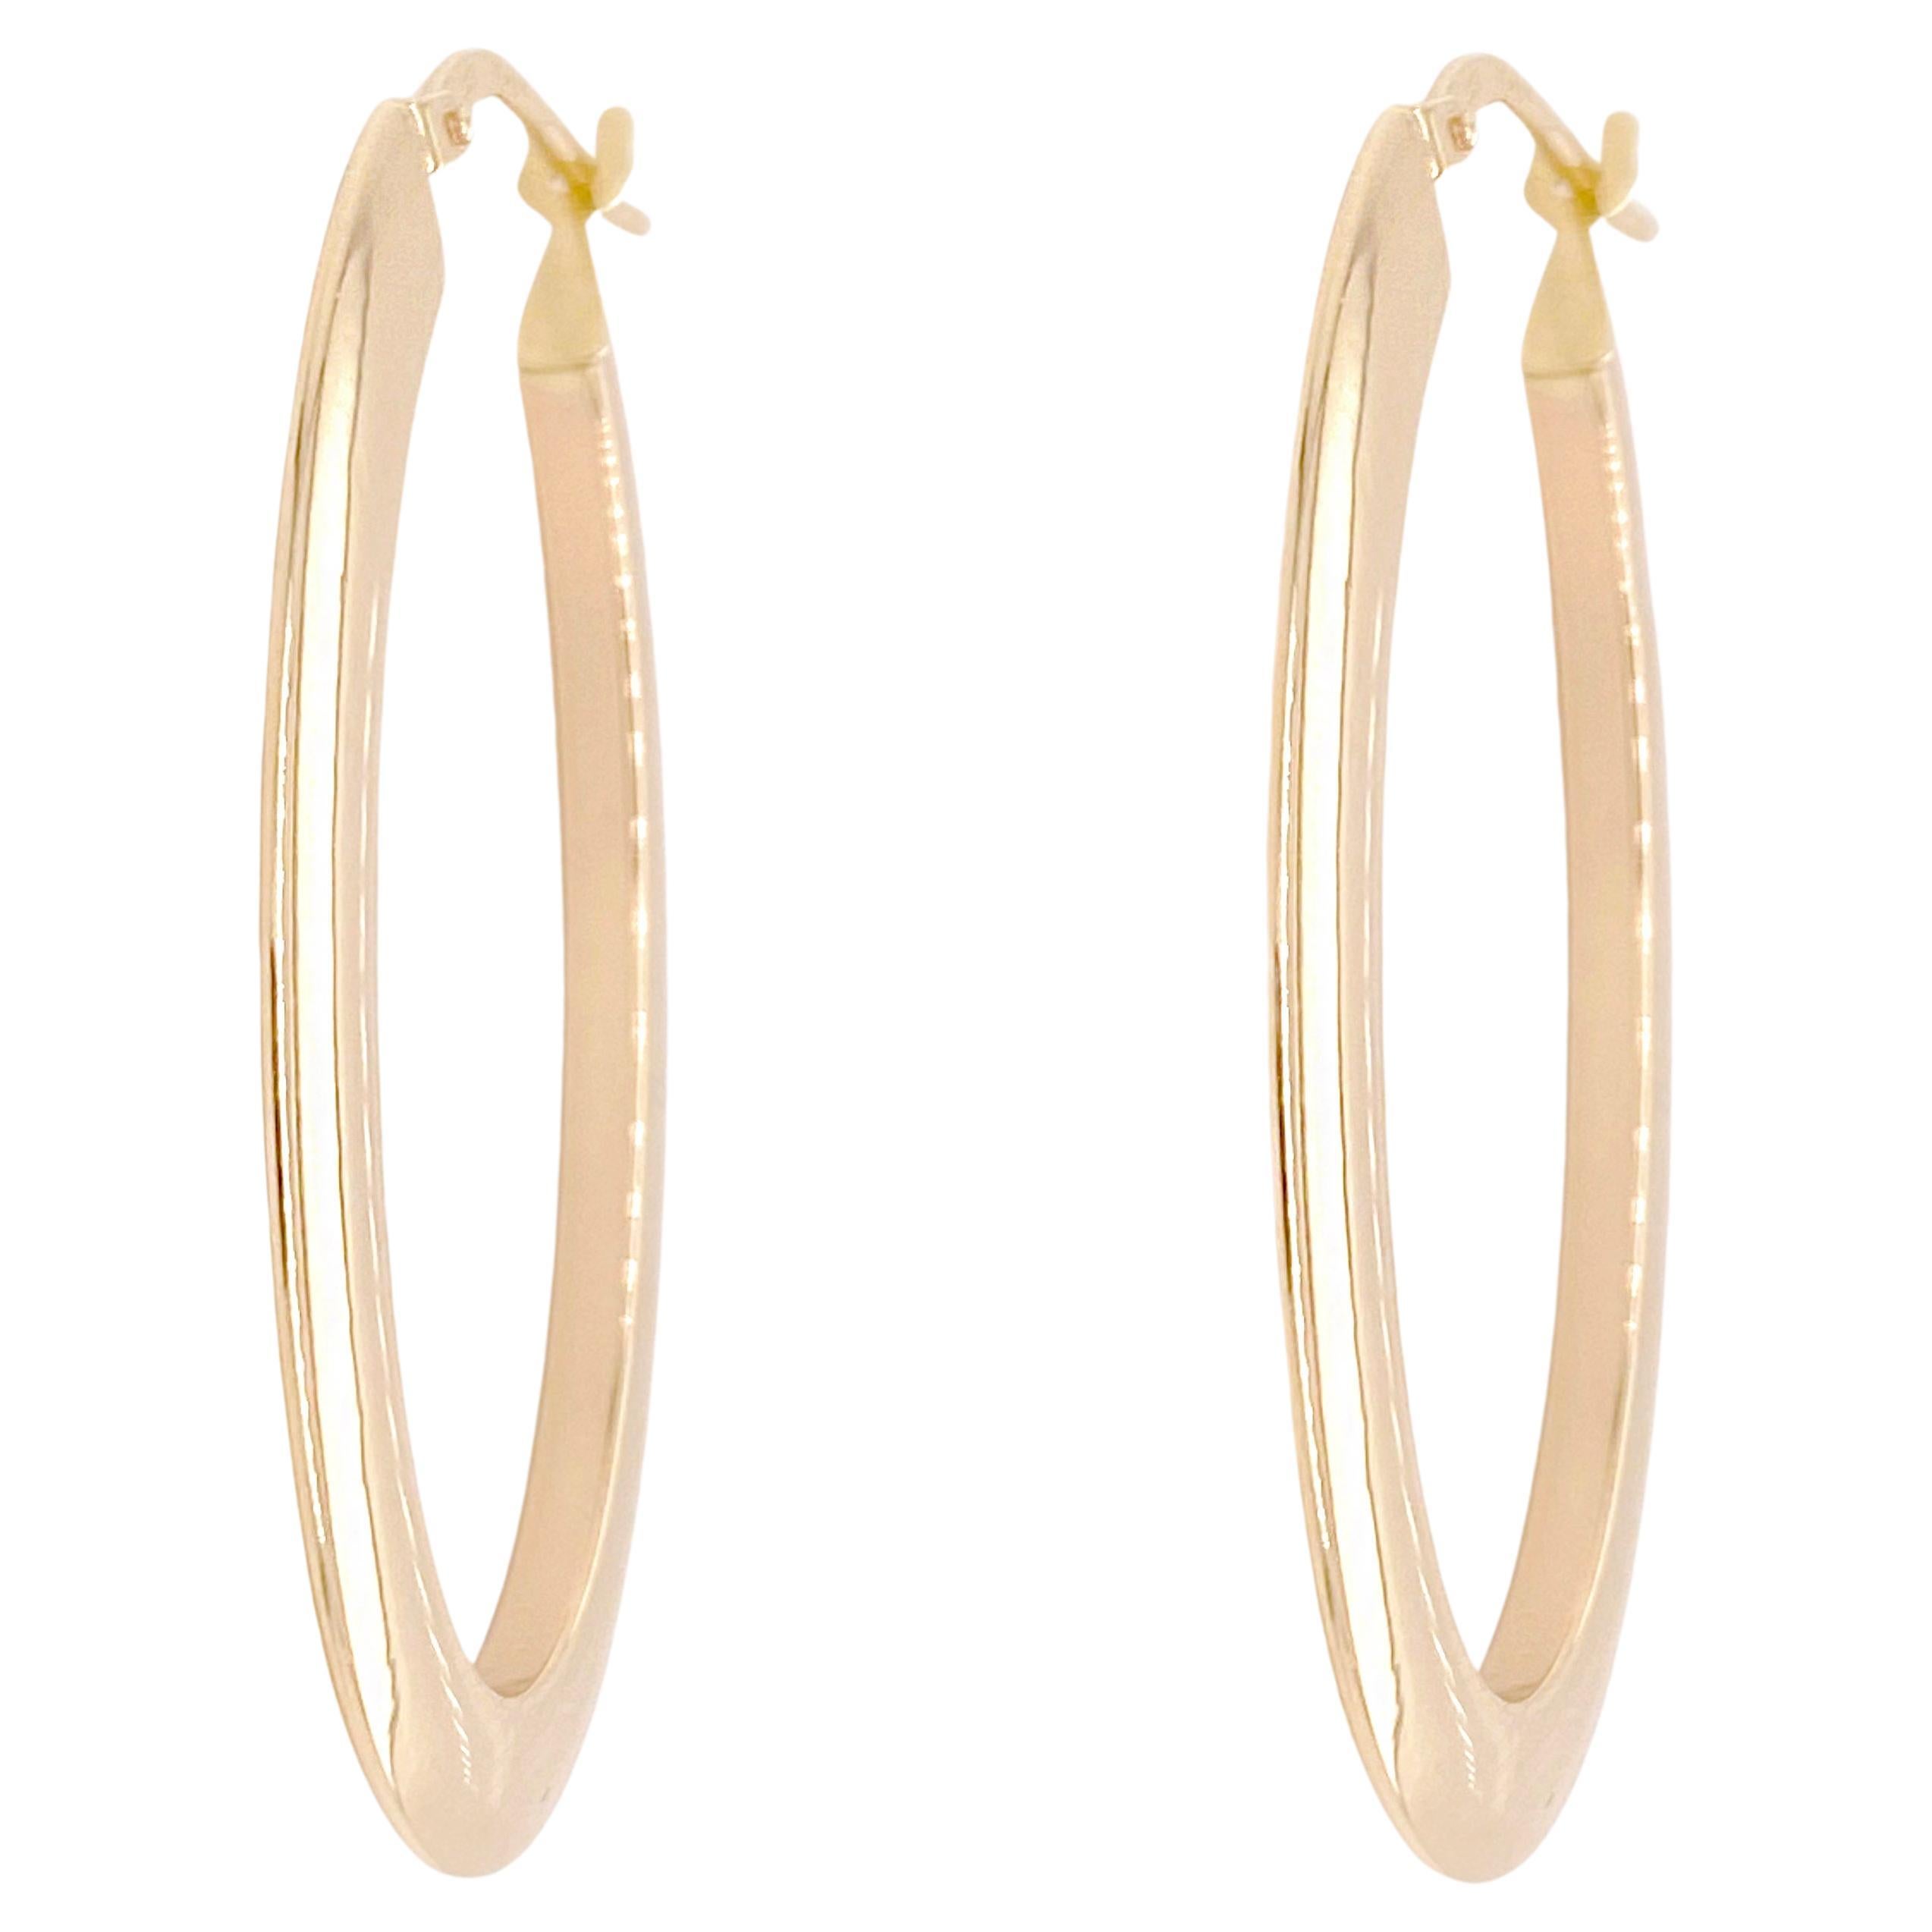 1.5-inch Oval Hoops, 40 x 25 mm Oval Earrings, Lightweight 14K Yellow Gold For Sale